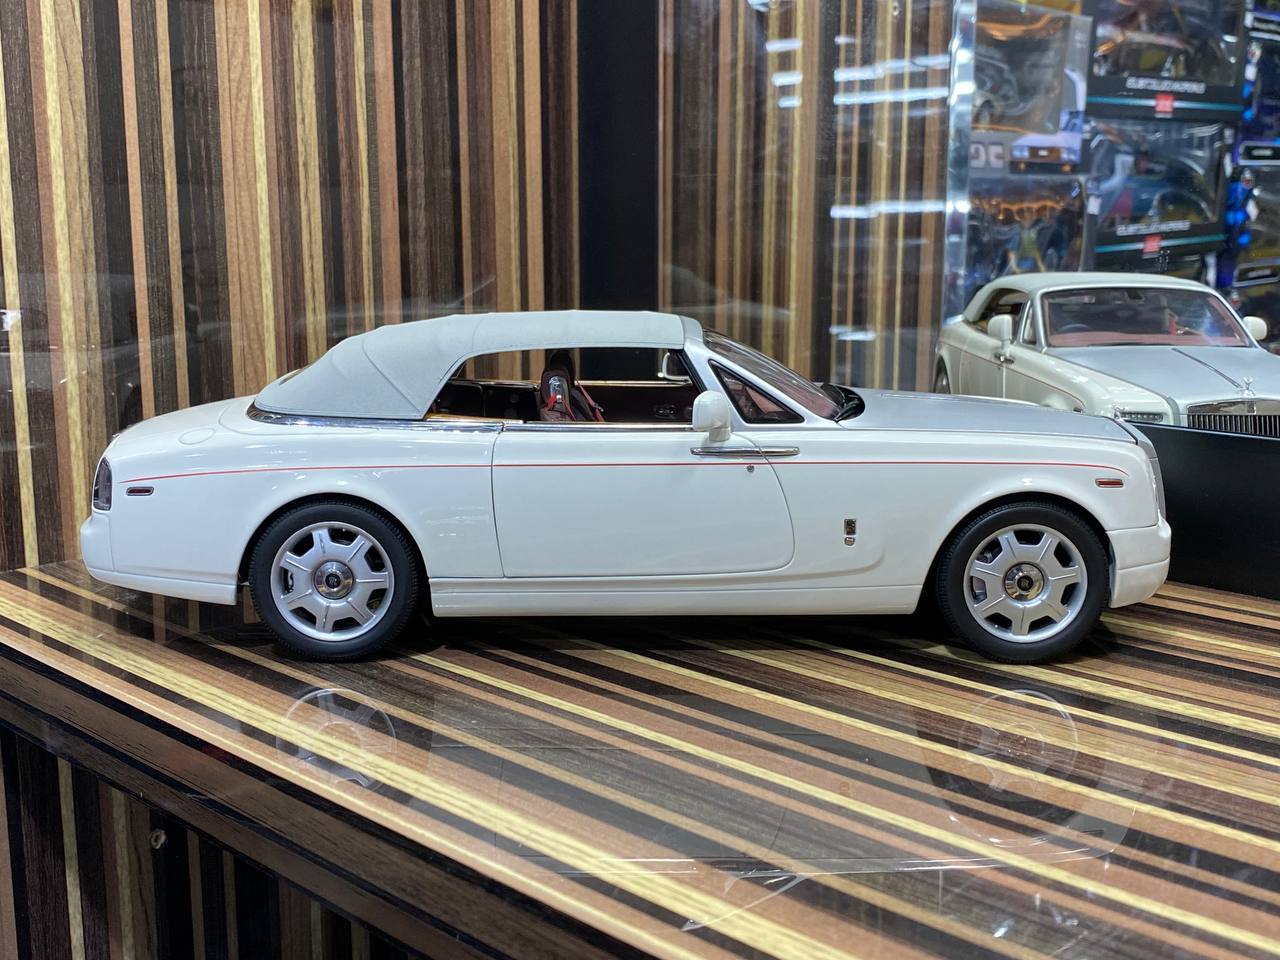 1/18 Diecast Rolls-Royce Phantom Drophead Coupe Kyosho Scale Model Car